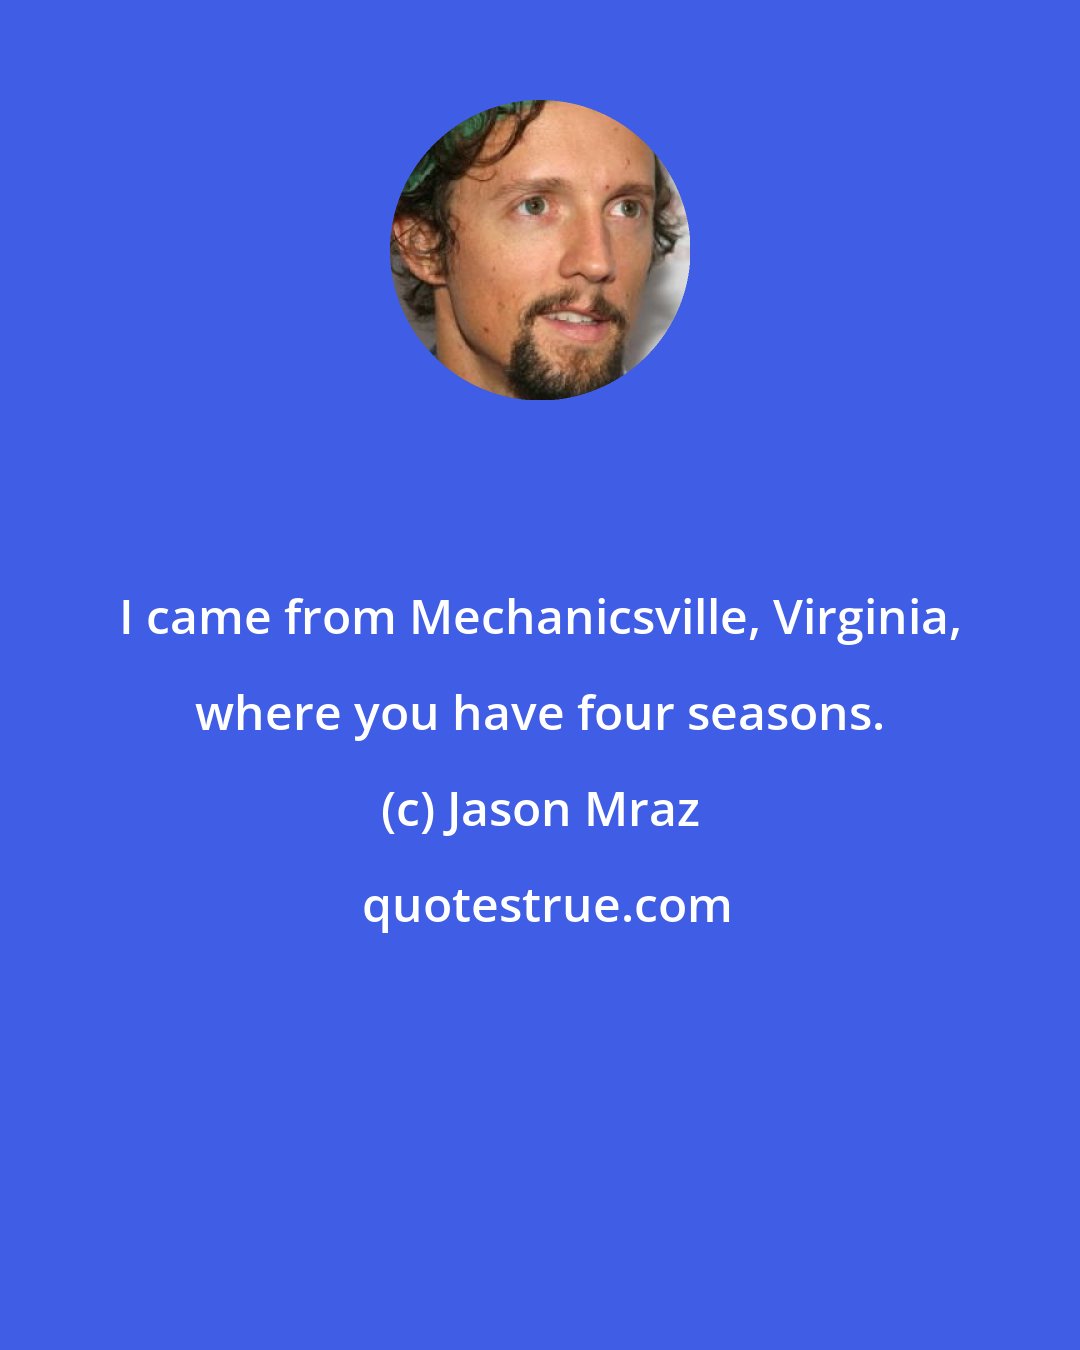 Jason Mraz: I came from Mechanicsville, Virginia, where you have four seasons.